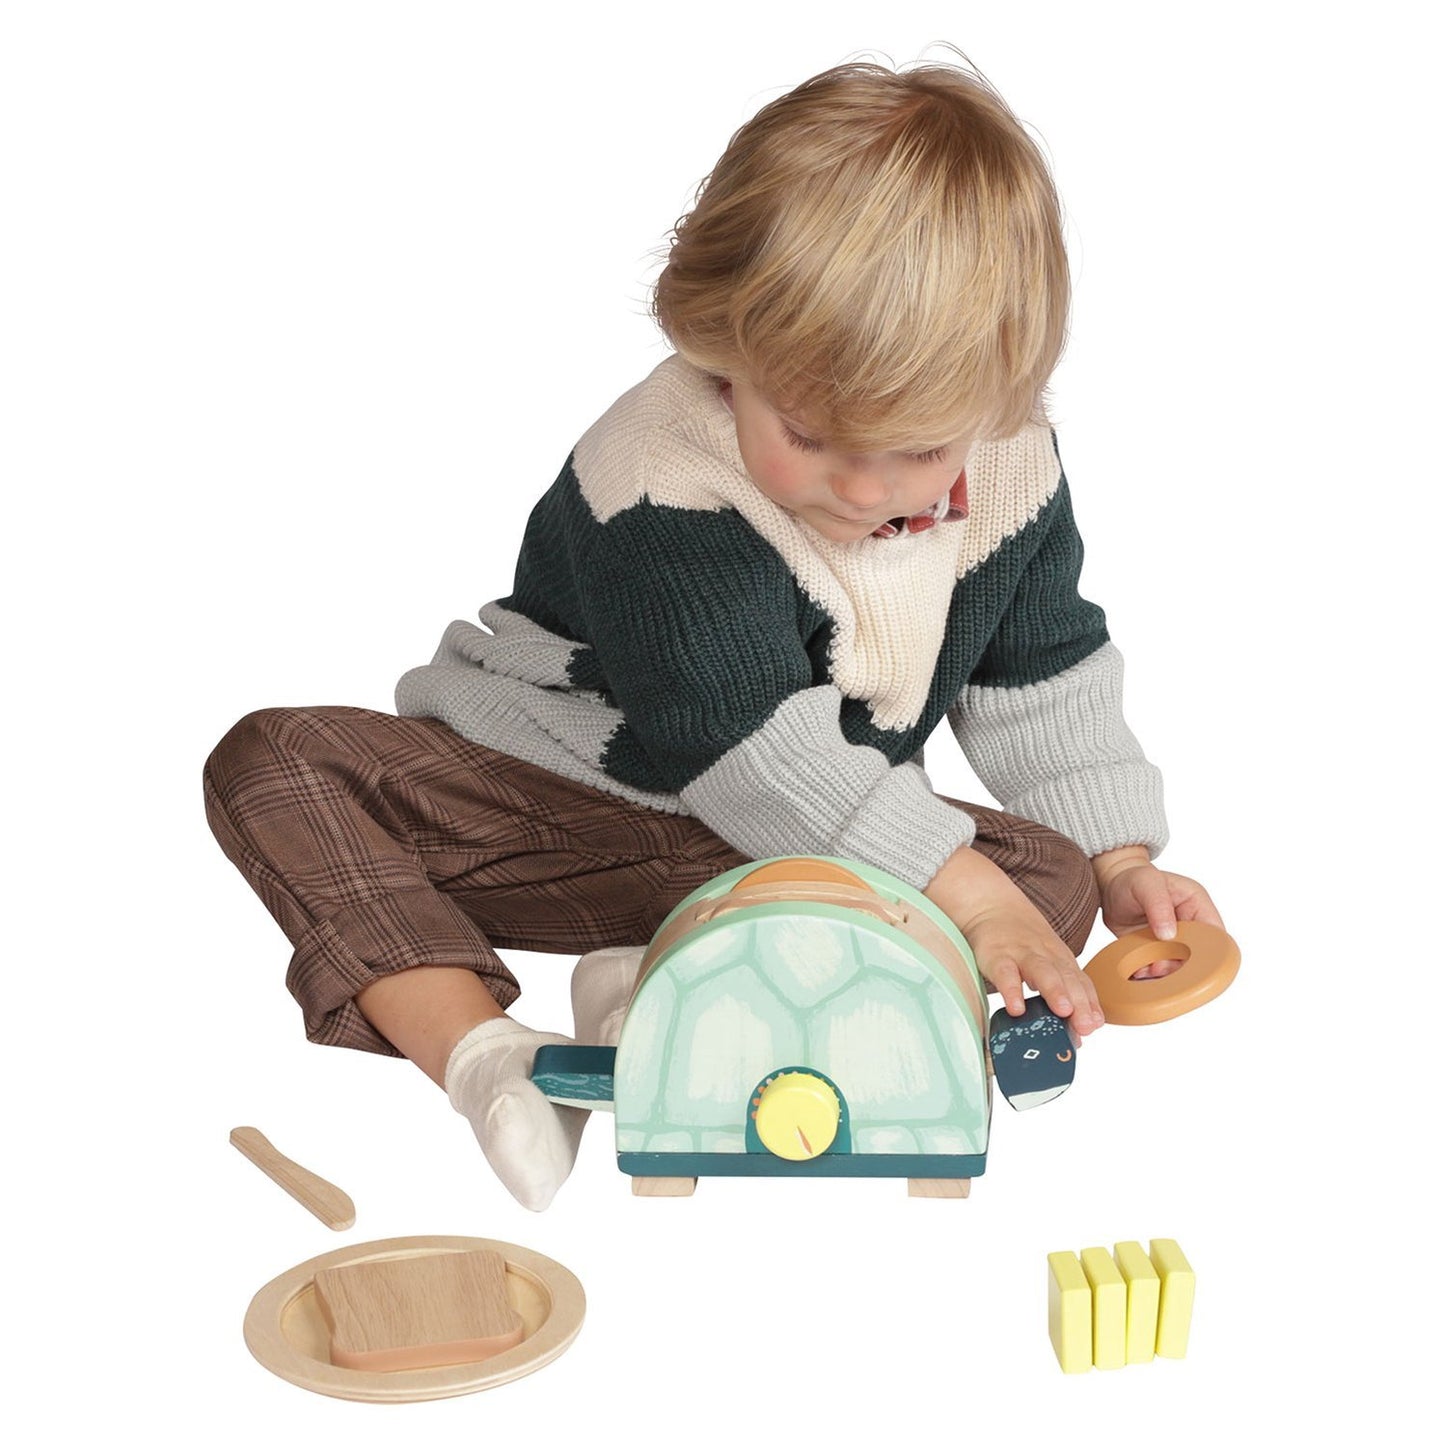 Toasty Turtle Toaster by Manhattan Toys - Wood Wood Toys Canada's Favourite Montessori Toy Store